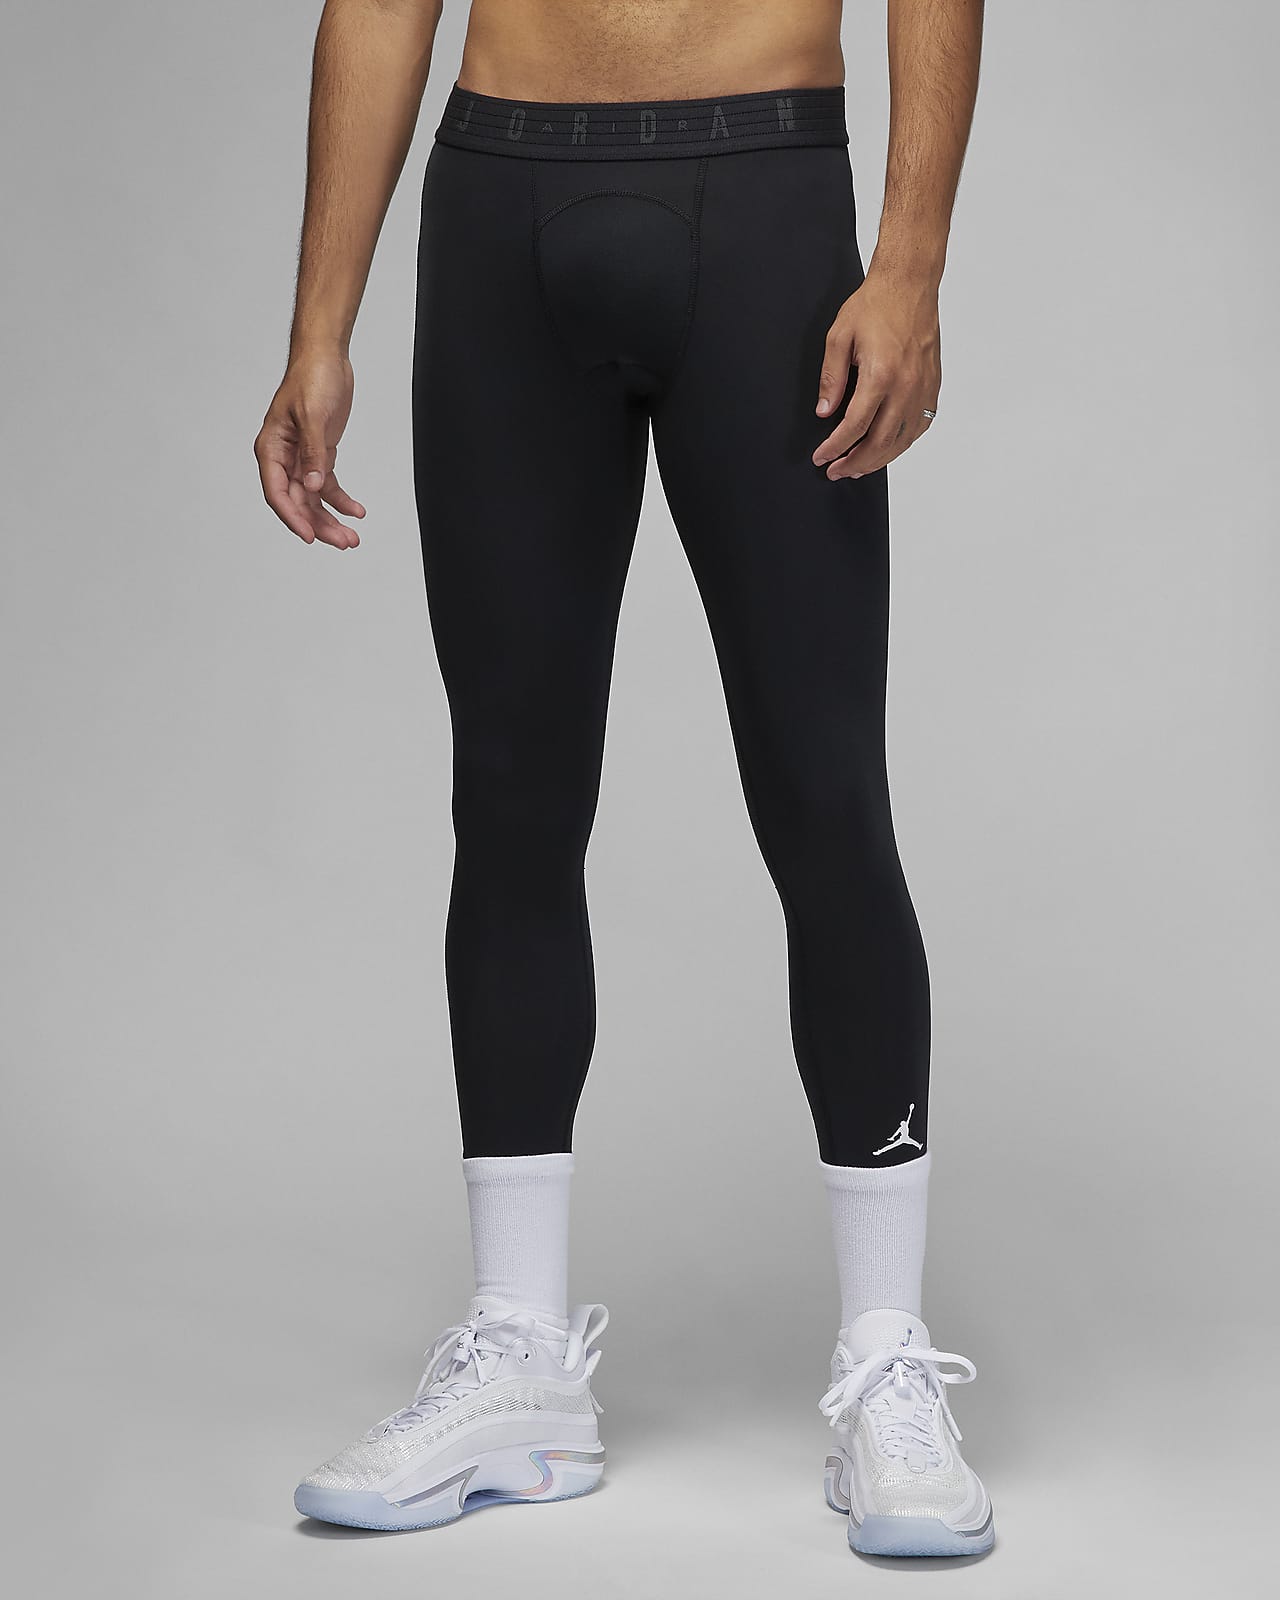  Boys Basketball Compression Pants One Leg Football Tights  3/4 Youth Sports Base Layer Workout Capri Leggings Blue XL